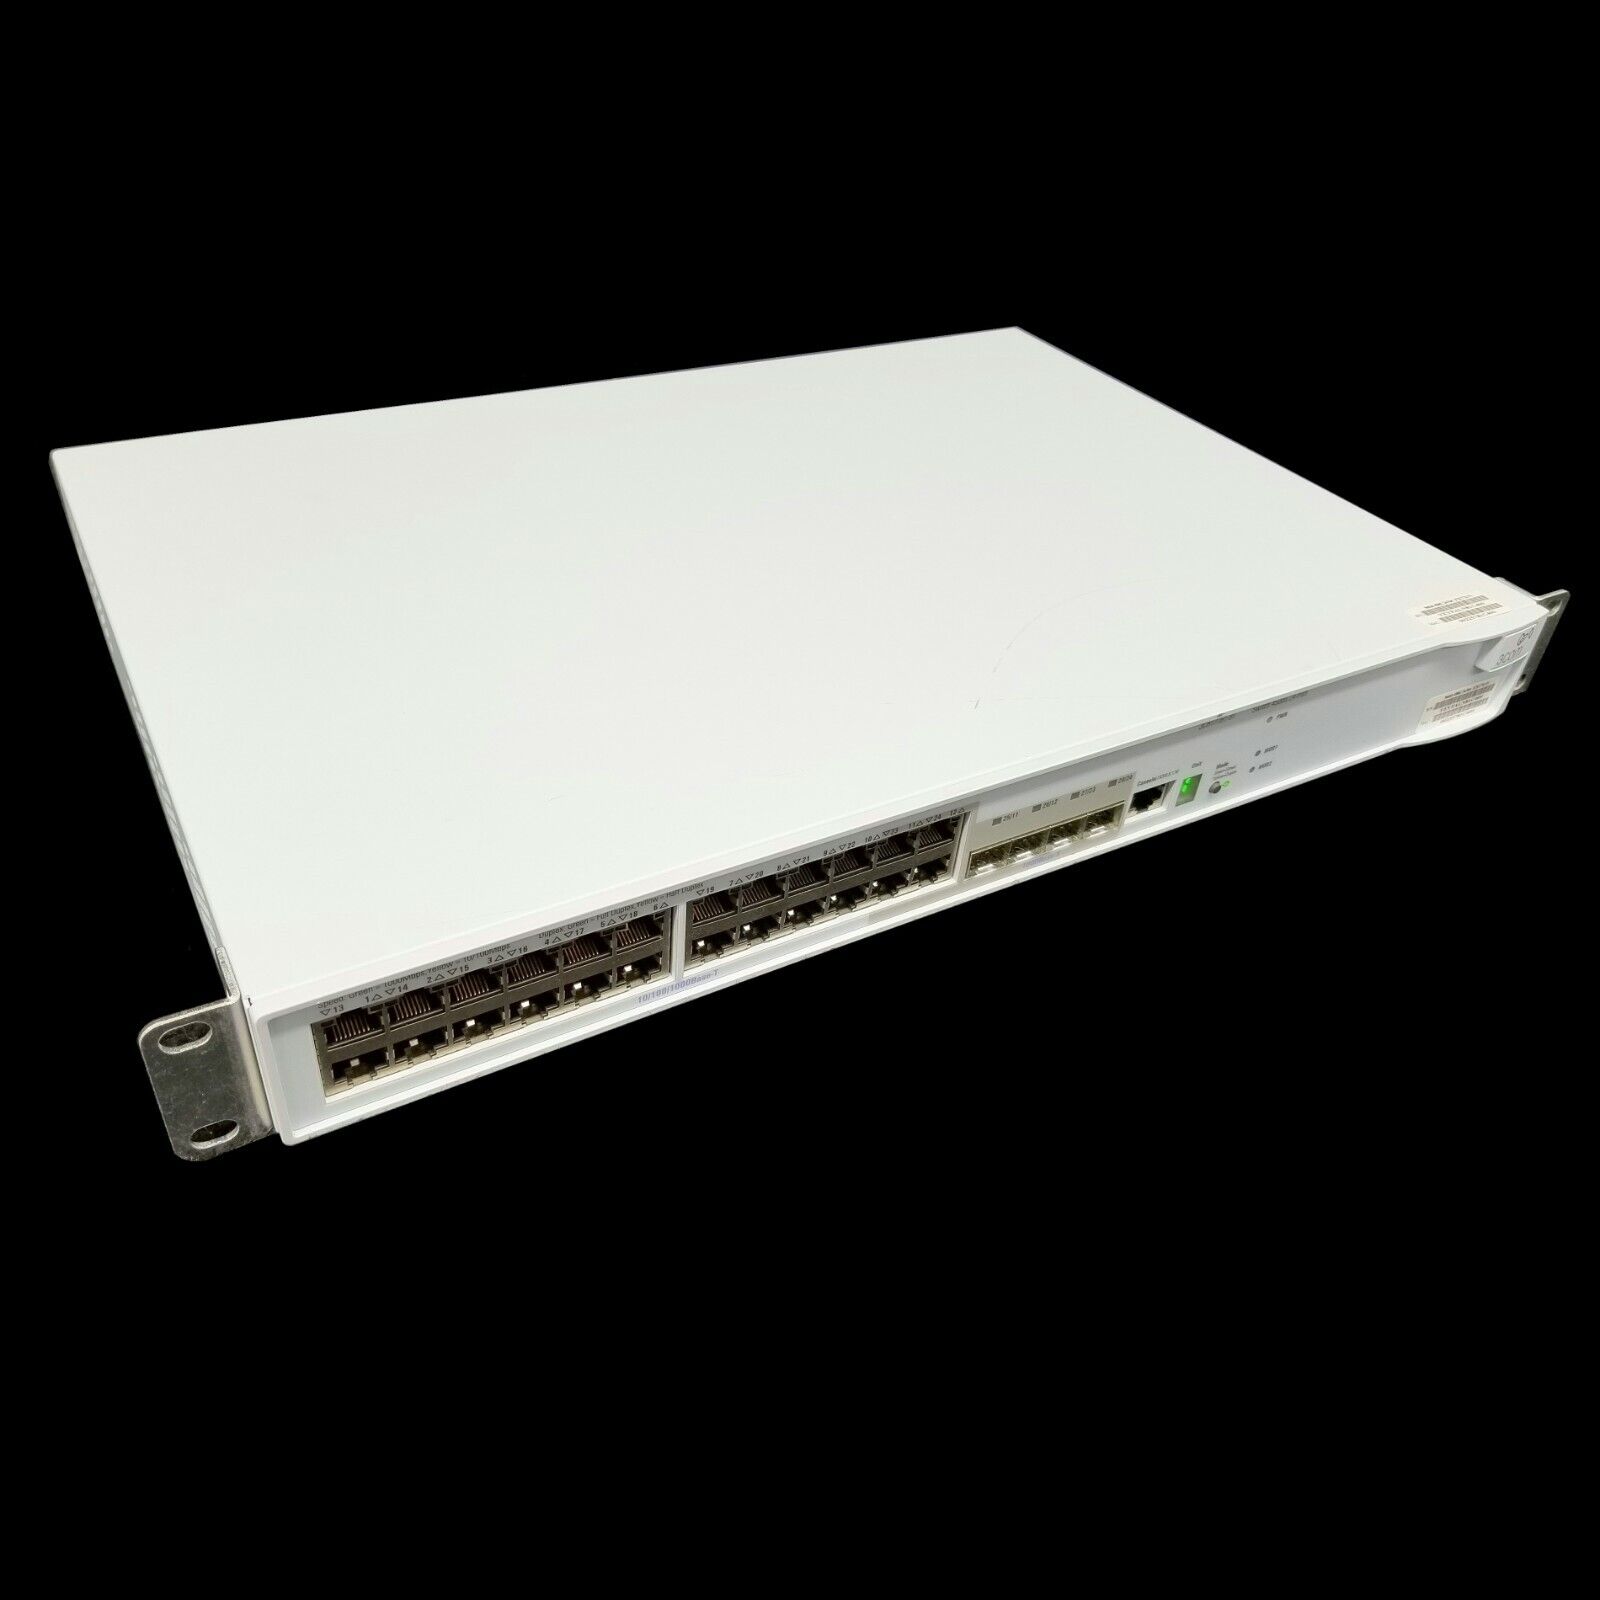 3Com 3CR17761-91 4500G 24 Port 10/100/1000 Managed Gigabit Switch Stackable